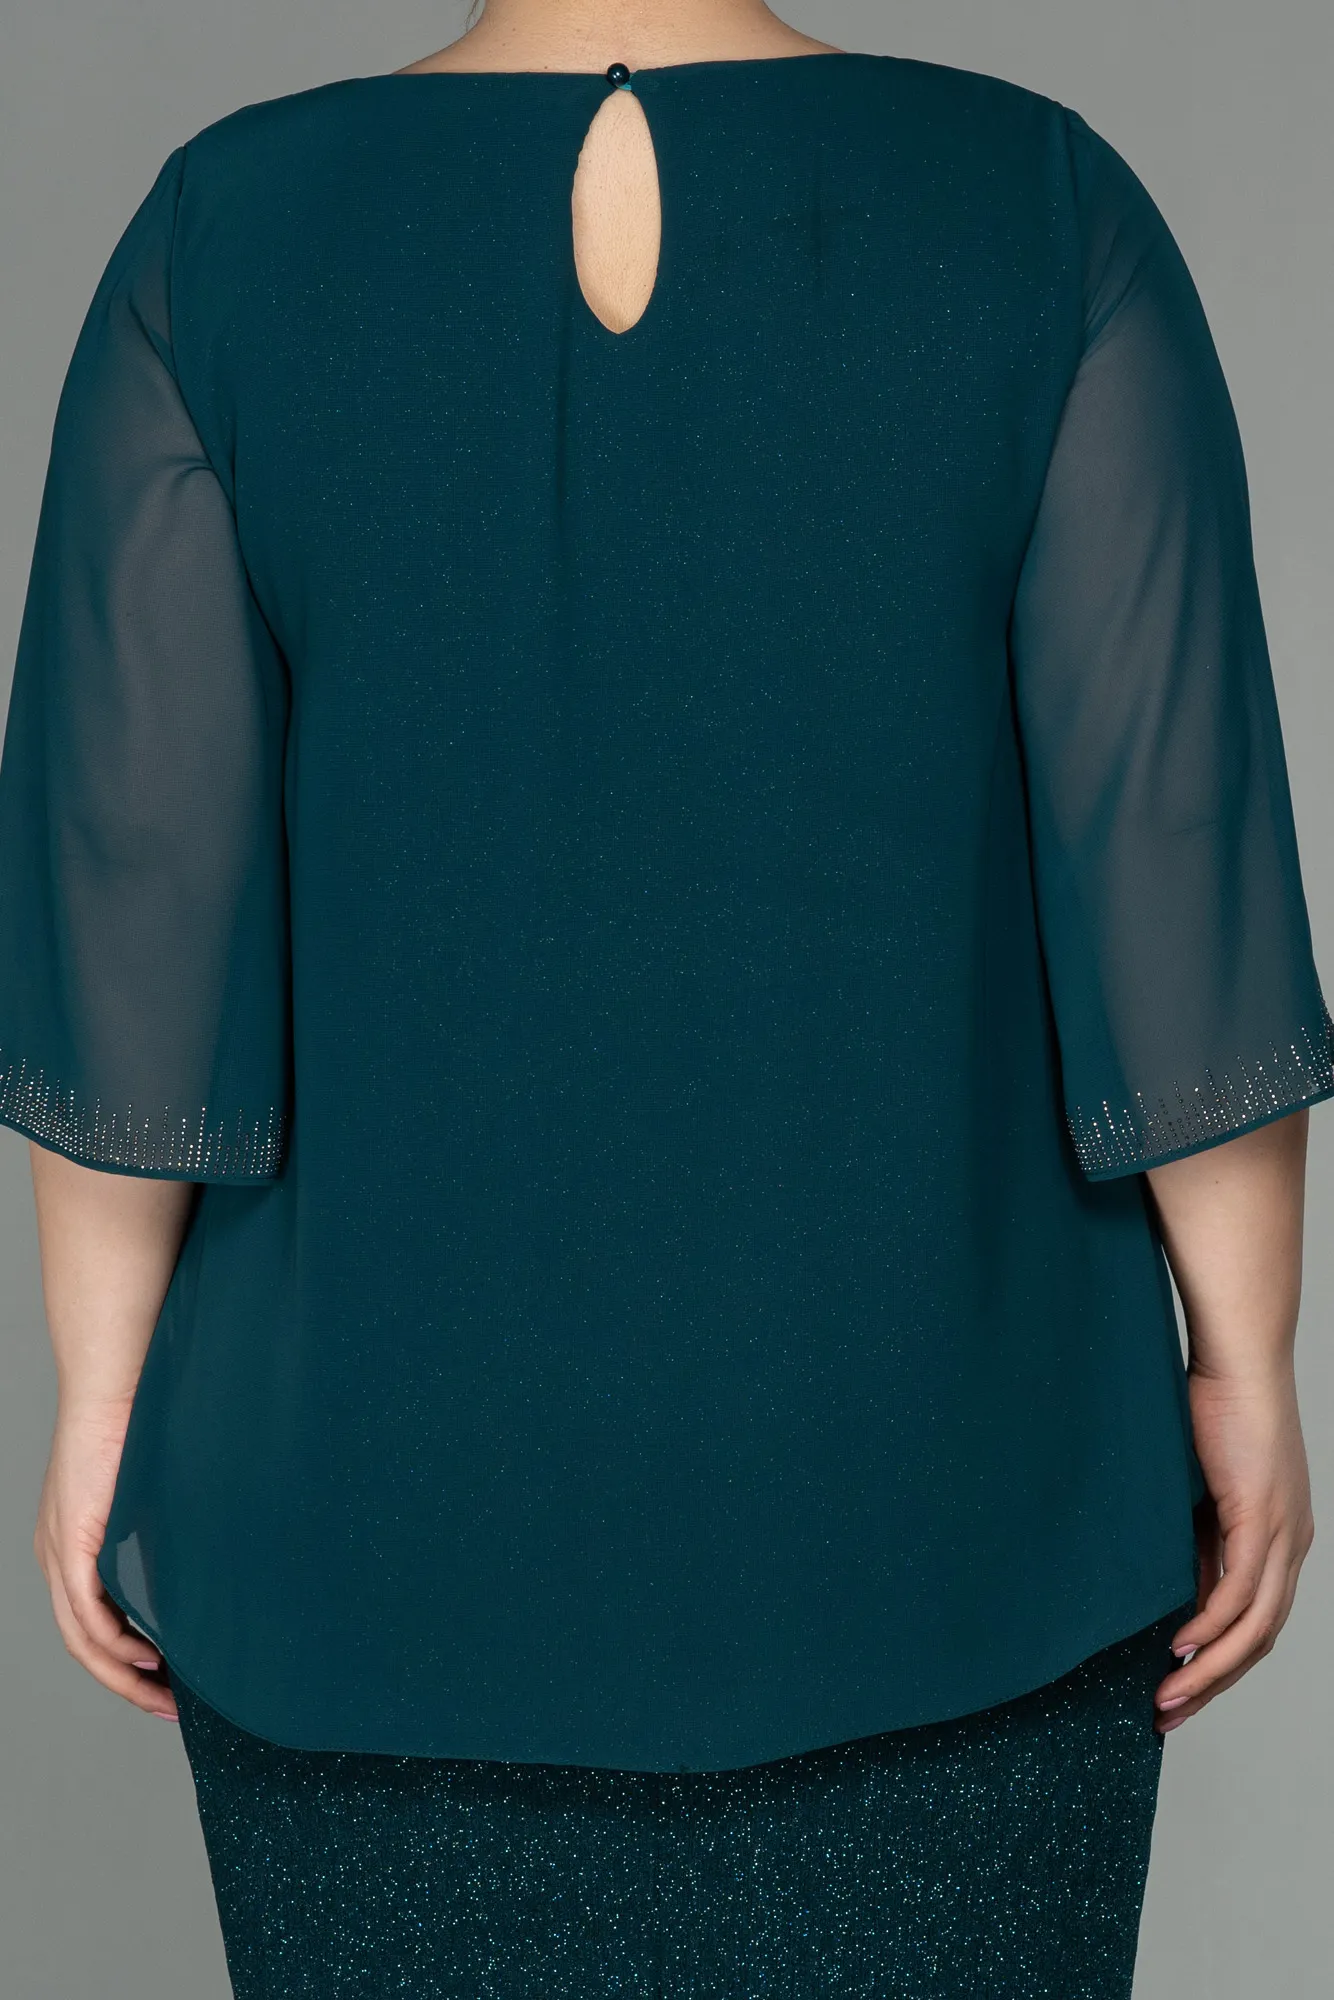 Emerald Green-Short Plus Size Evening Dress ABK1593